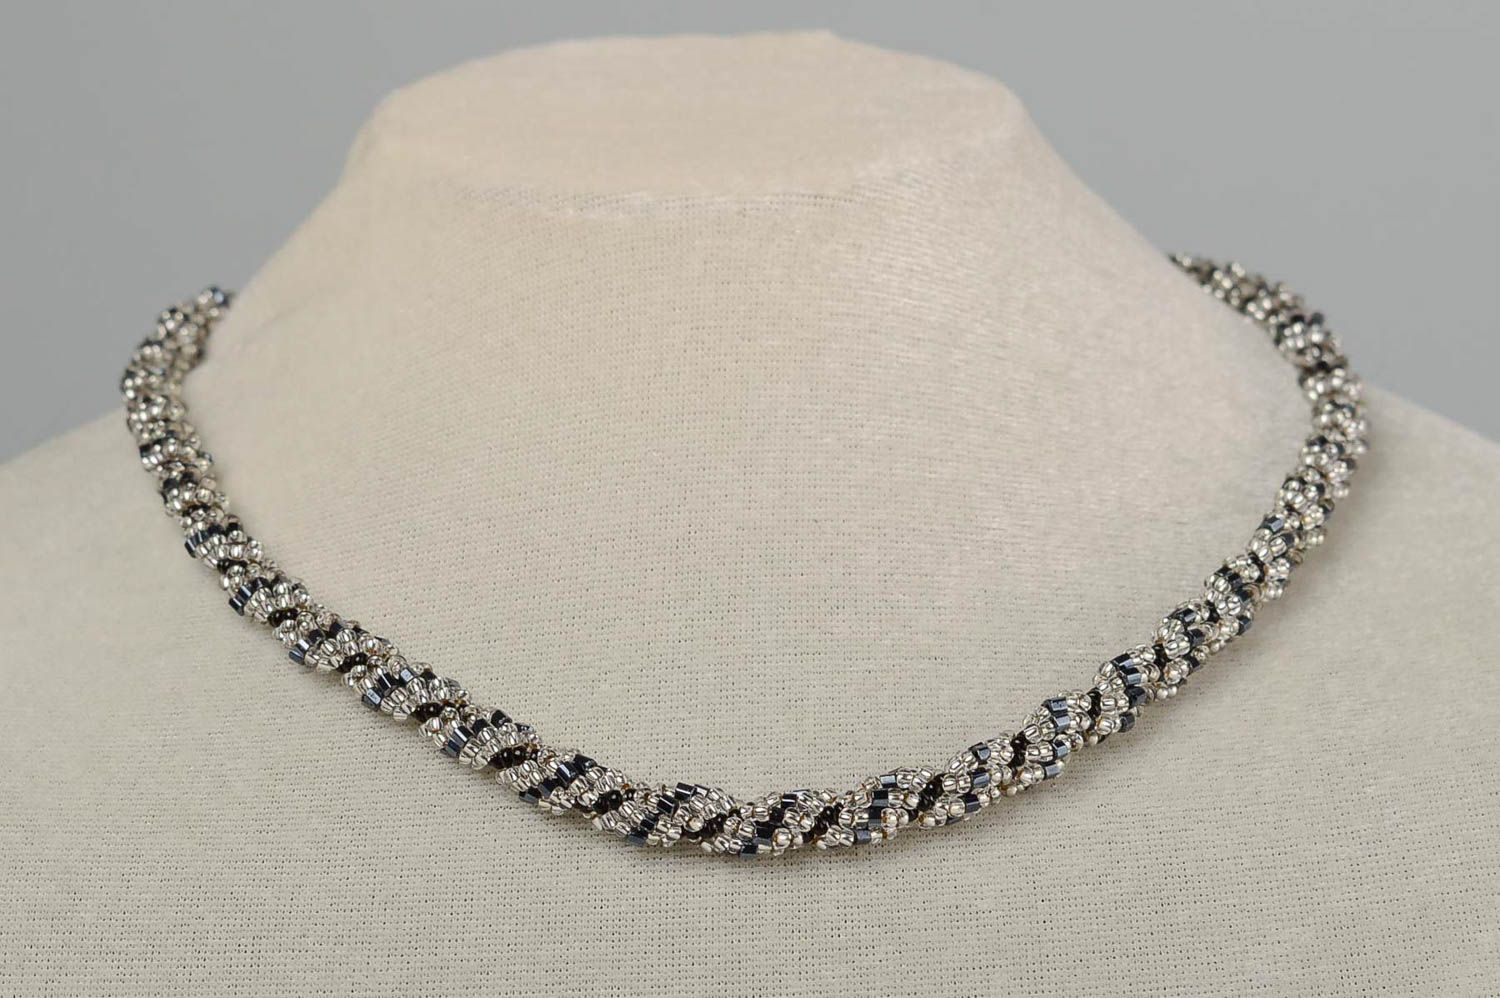 Beaded necklace handmade elegatn jewelry for women exclusive accessories photo 2